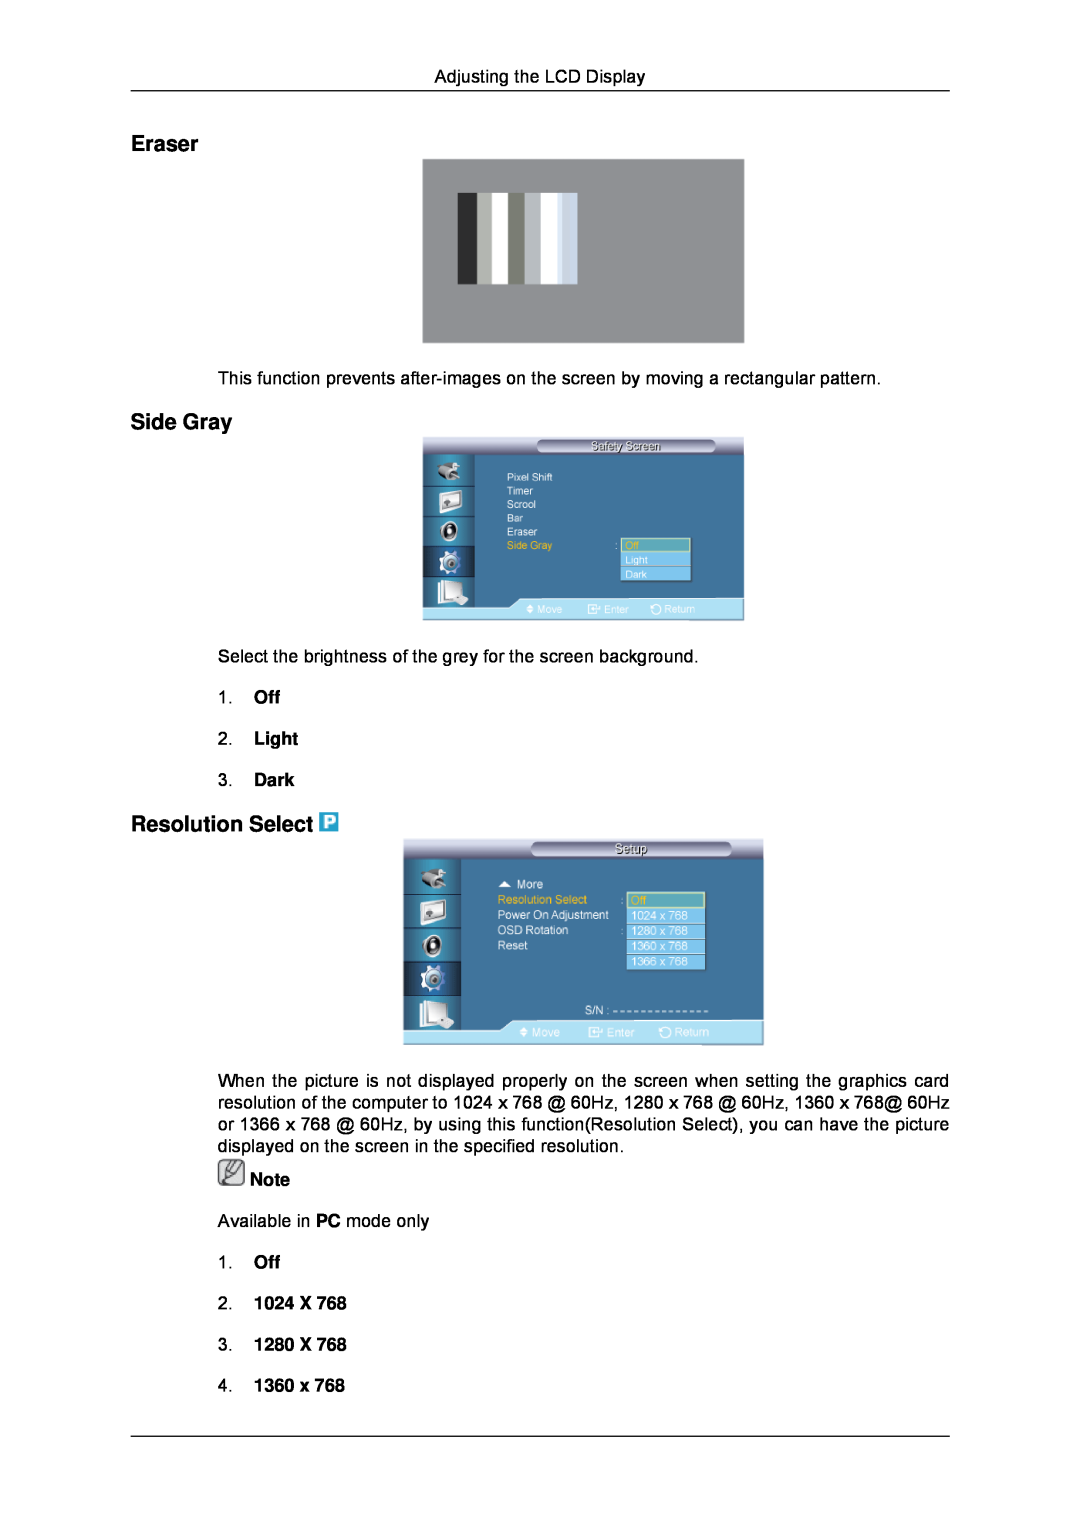 Samsung LH70TCSMBG/EN manual Eraser, Side Gray, Resolution Select, Off 2. Light 3. Dark, Off 2. 1024 X 3. 1280 X 4. 1360 x 